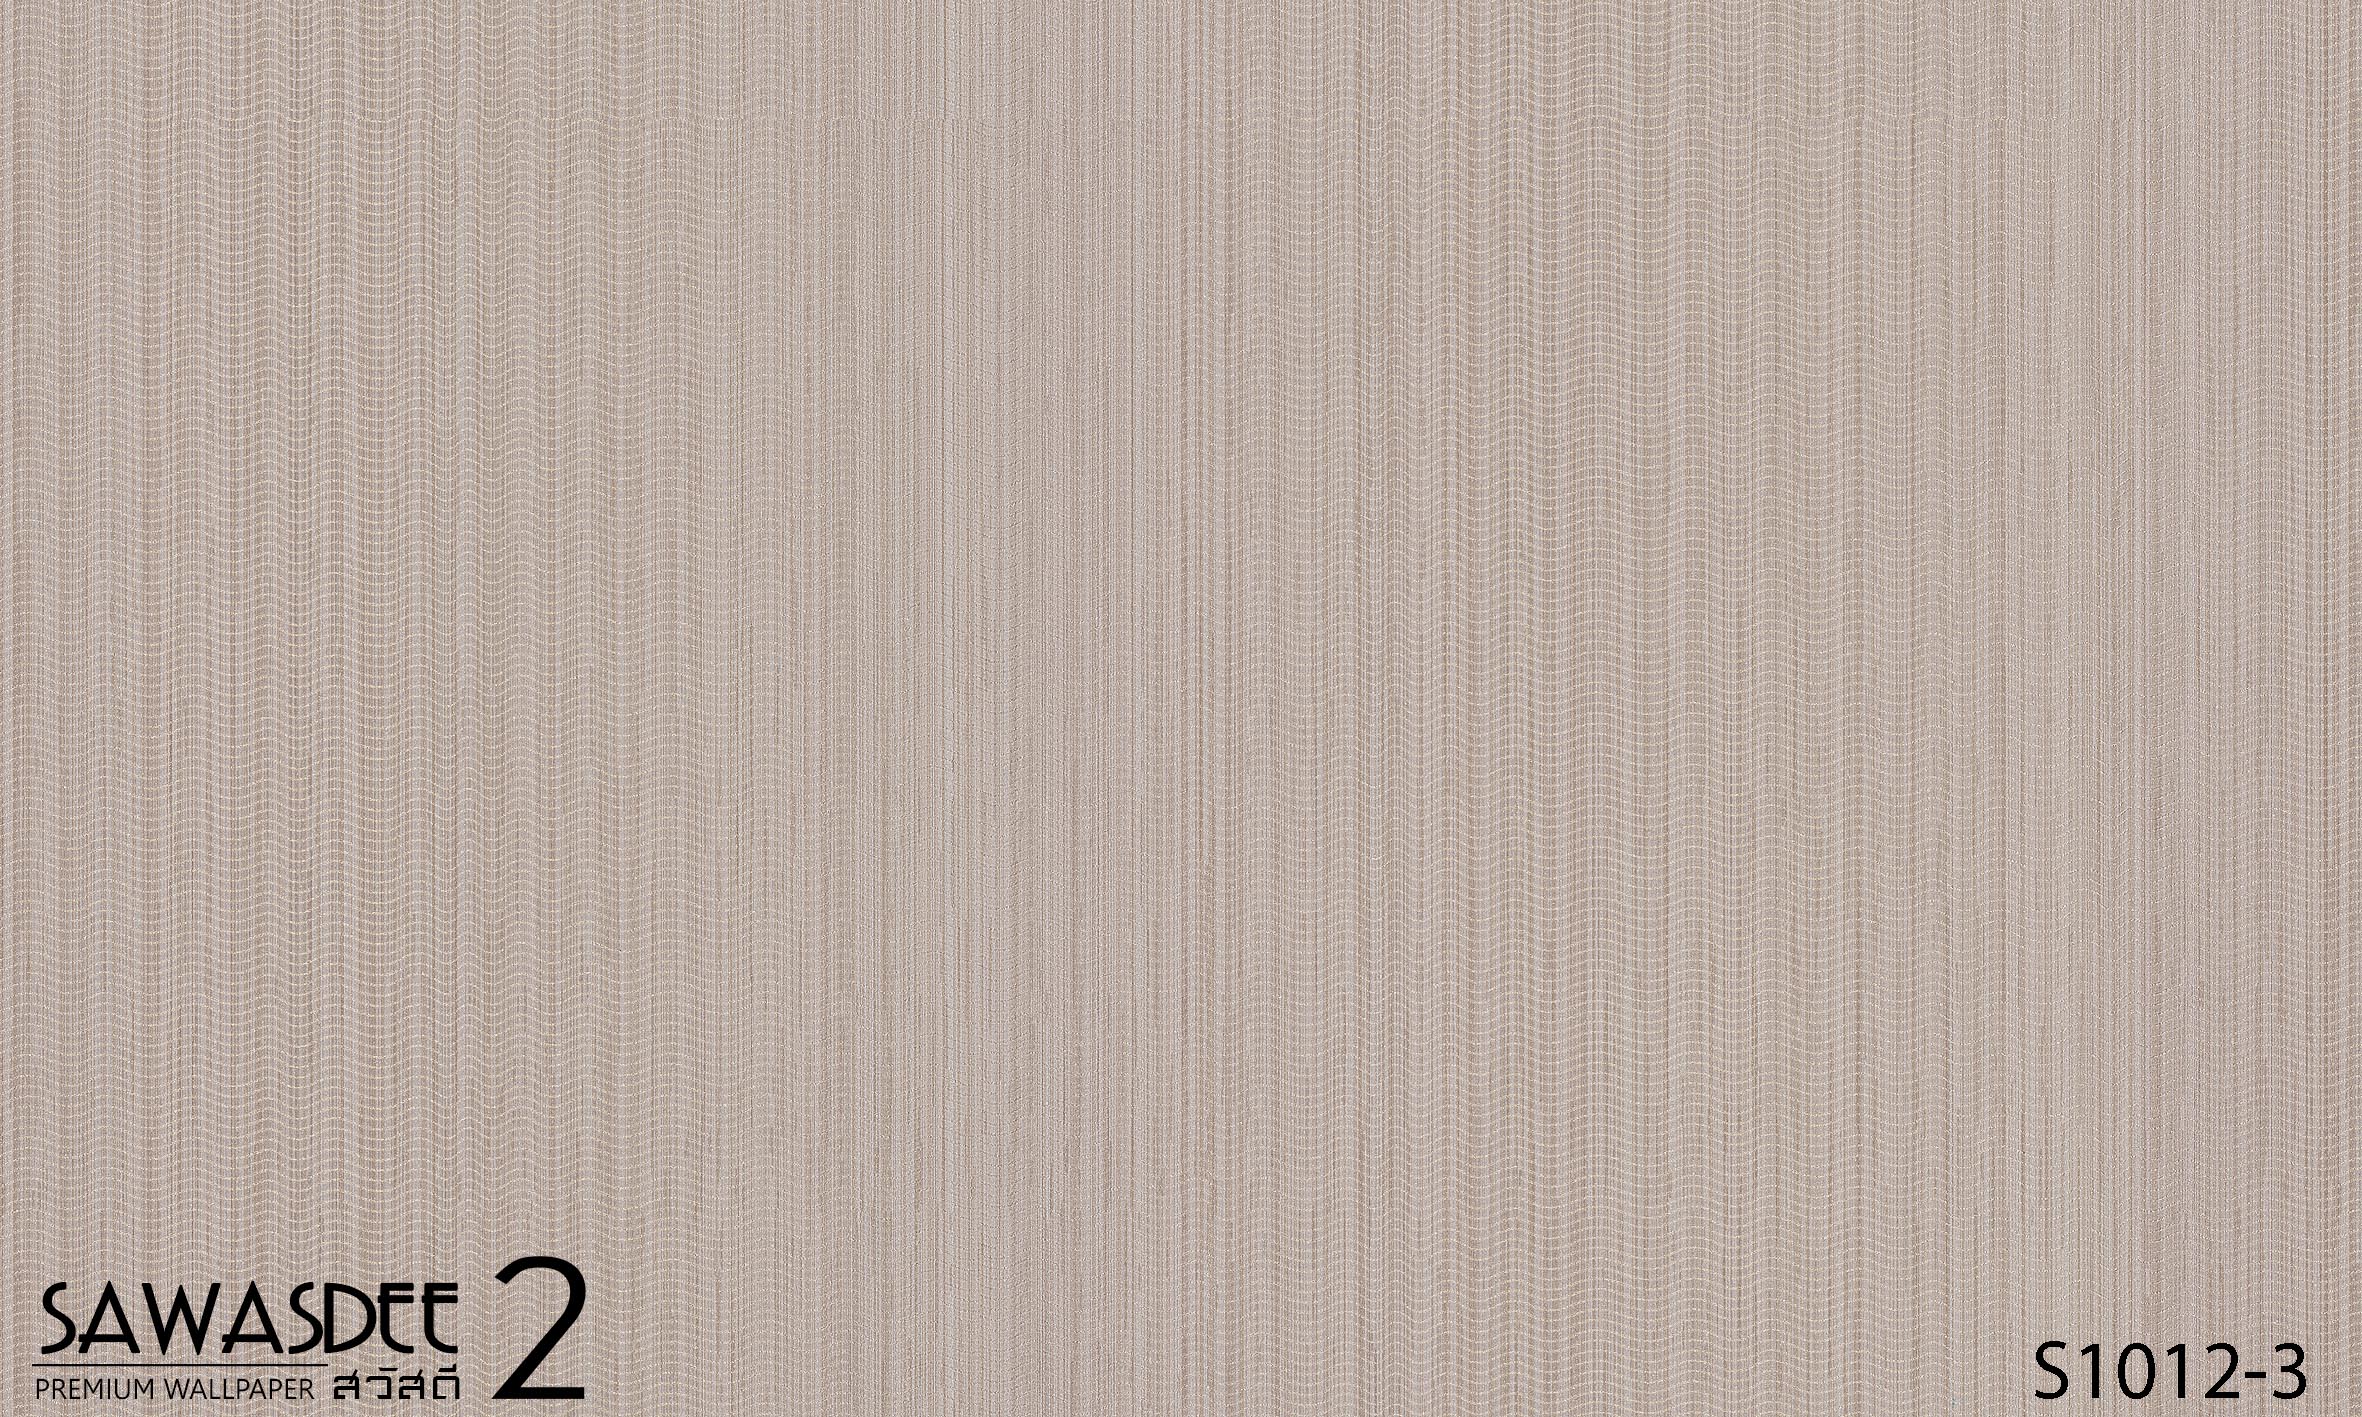 Wallpaper (SAWASDEE 2) S1012-3